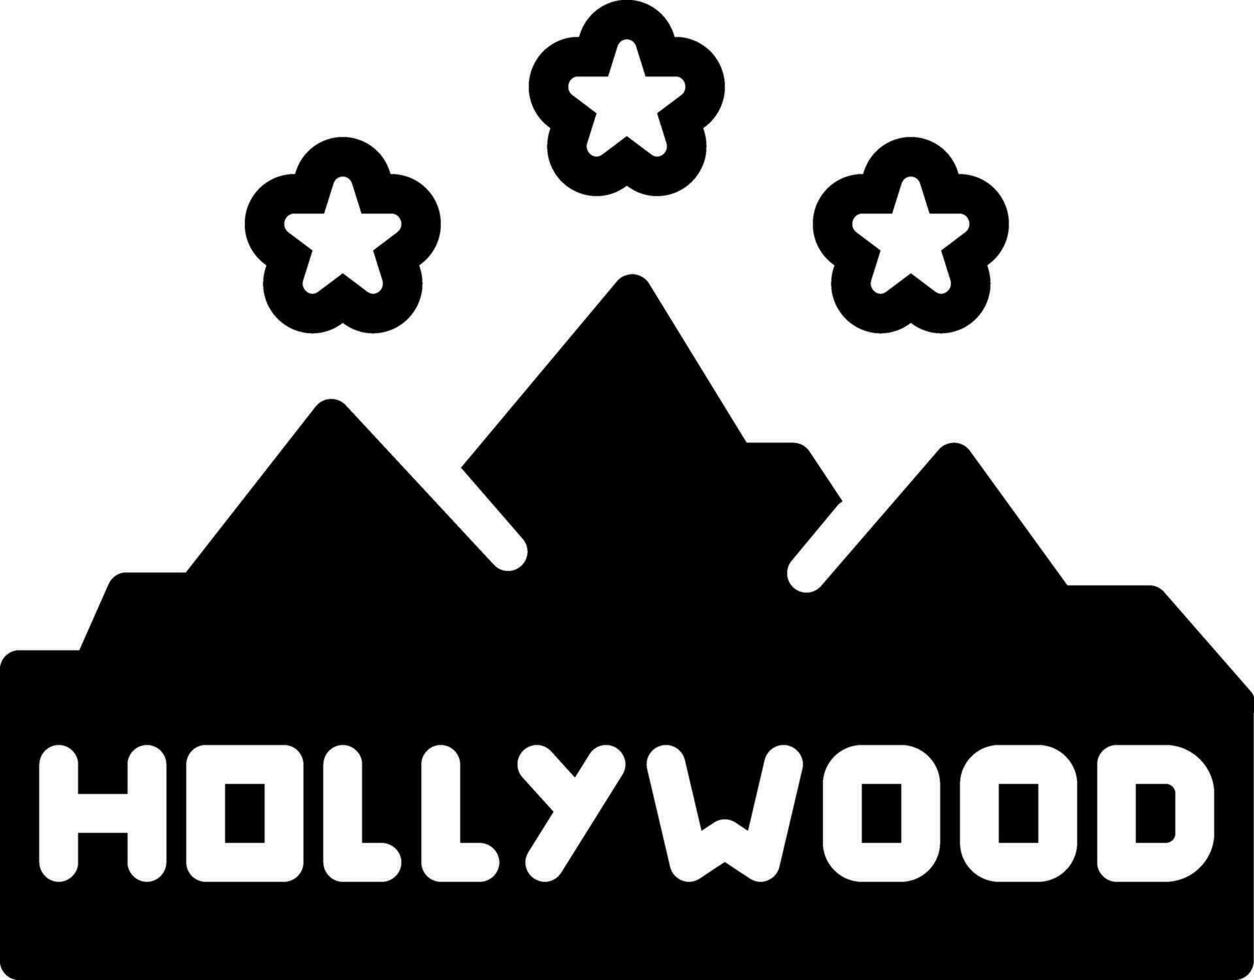 solide Symbol zum Hollywood vektor